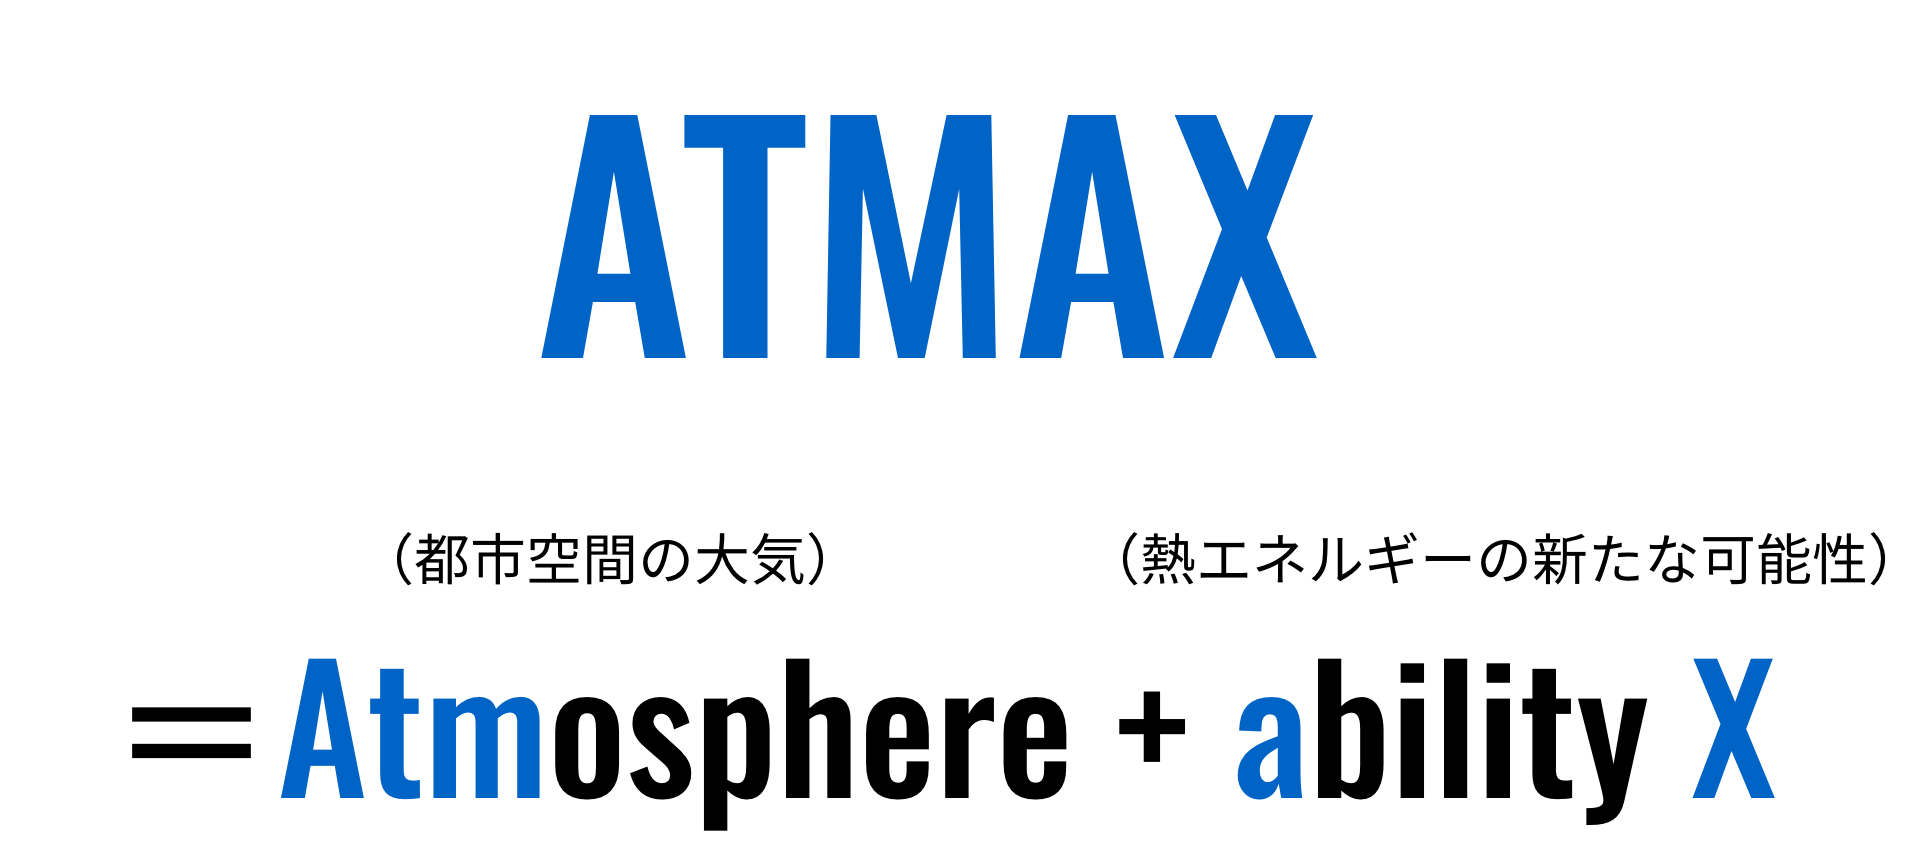 ATMAX : Atmosphere （都市空間の大気） + ability X （熱エネルギーの新たな可能性）